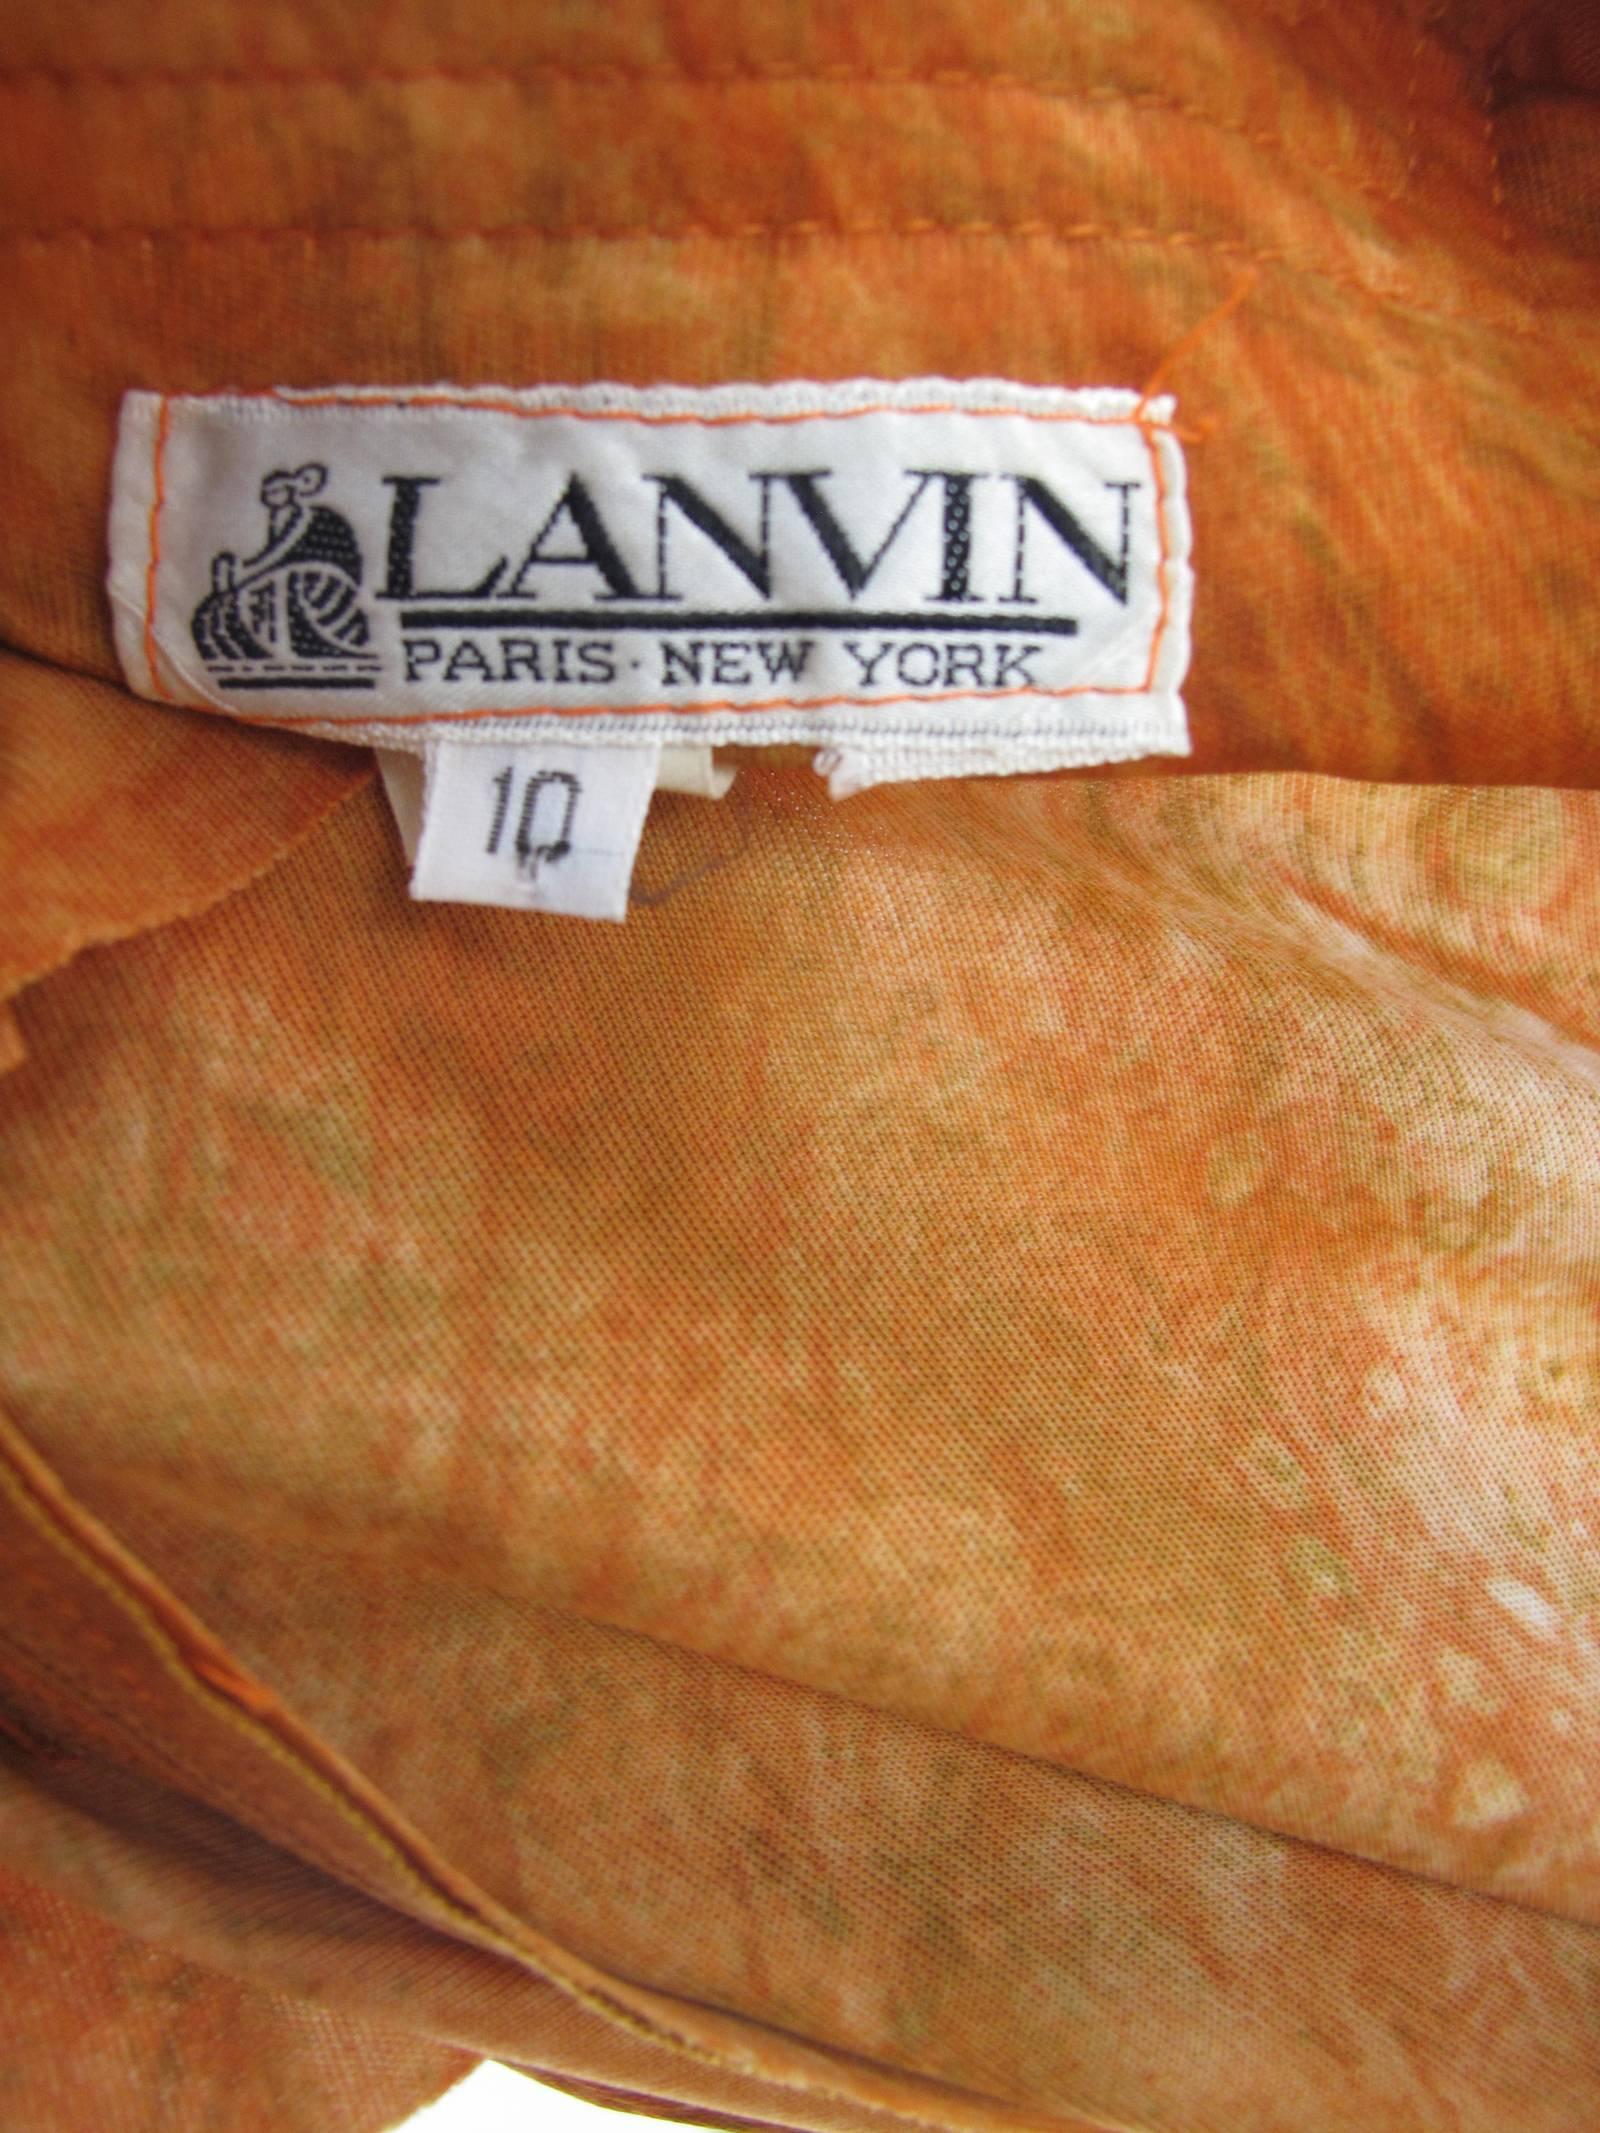 1970s Lanvin orange tie dye top, skirt and belt.  Condition:Excellent. Size 10 / current size 8 -10
Top: 33" bust, 29" waist, 34" hips, 2 1/2" sleeve, 23 1/2" length. 
Skirt: 26" elastic waist, 4" hips, 43"